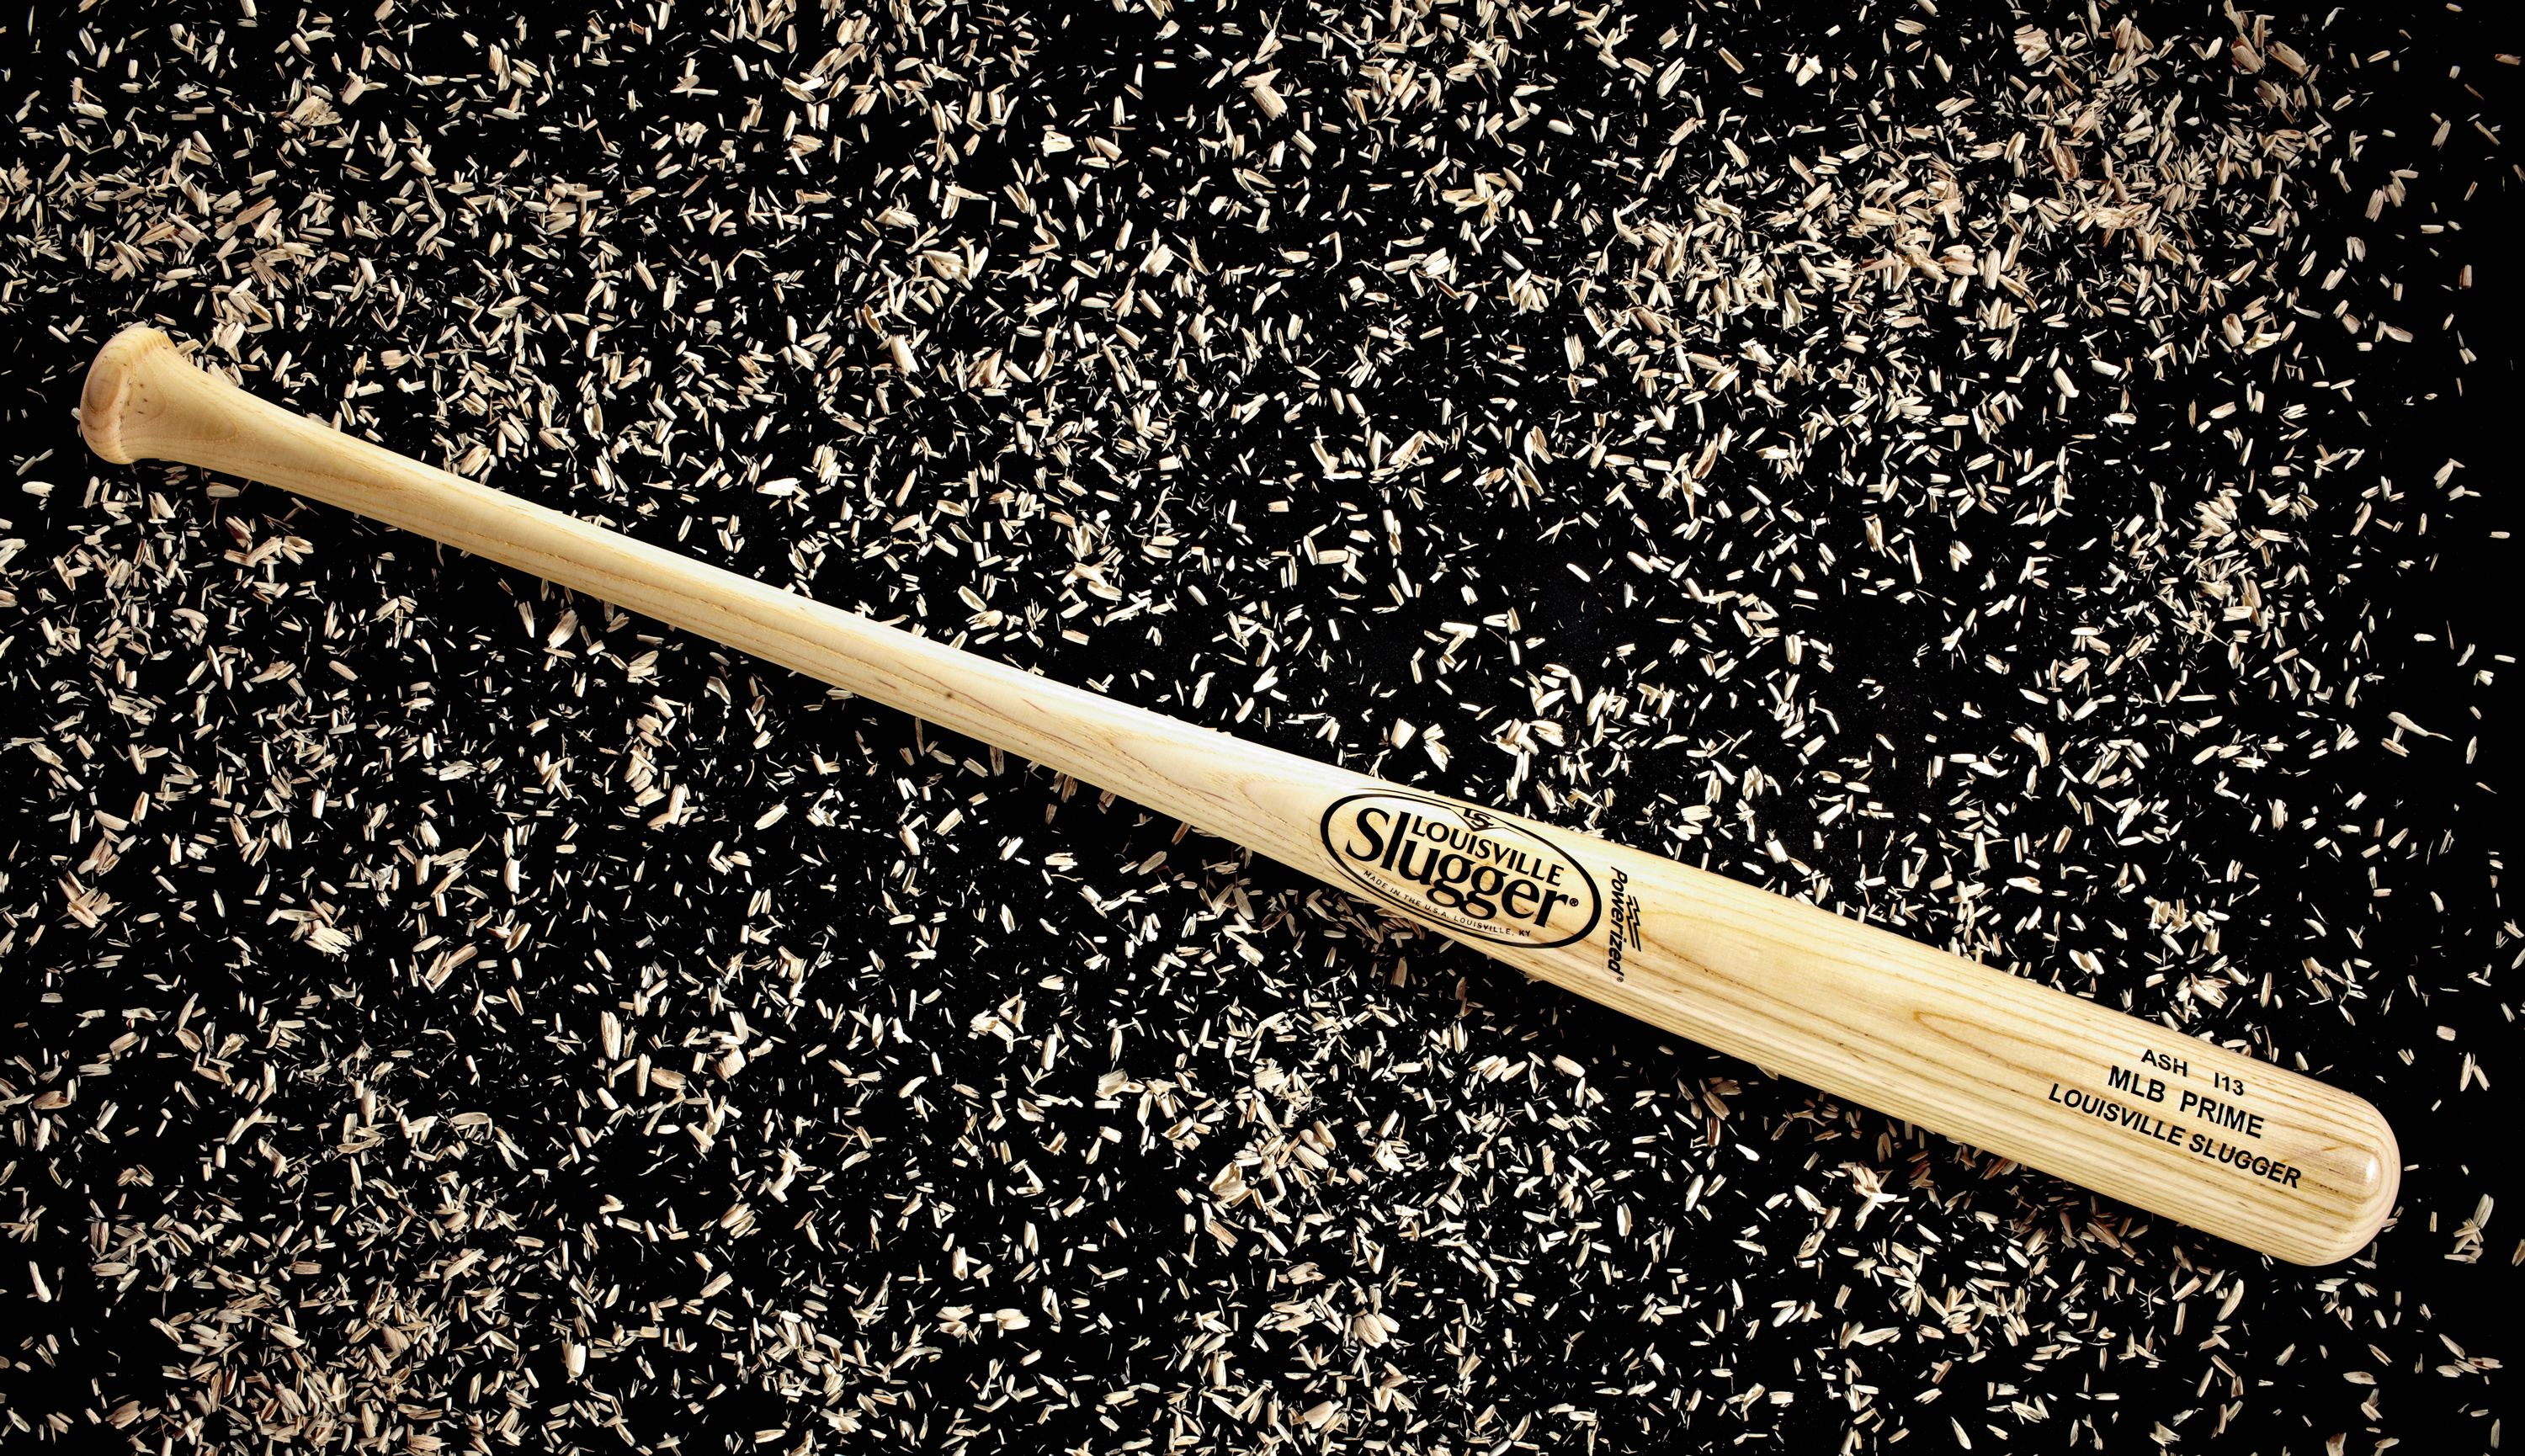 Chia sẻ 52+ về MLB baseball bat hay nhất